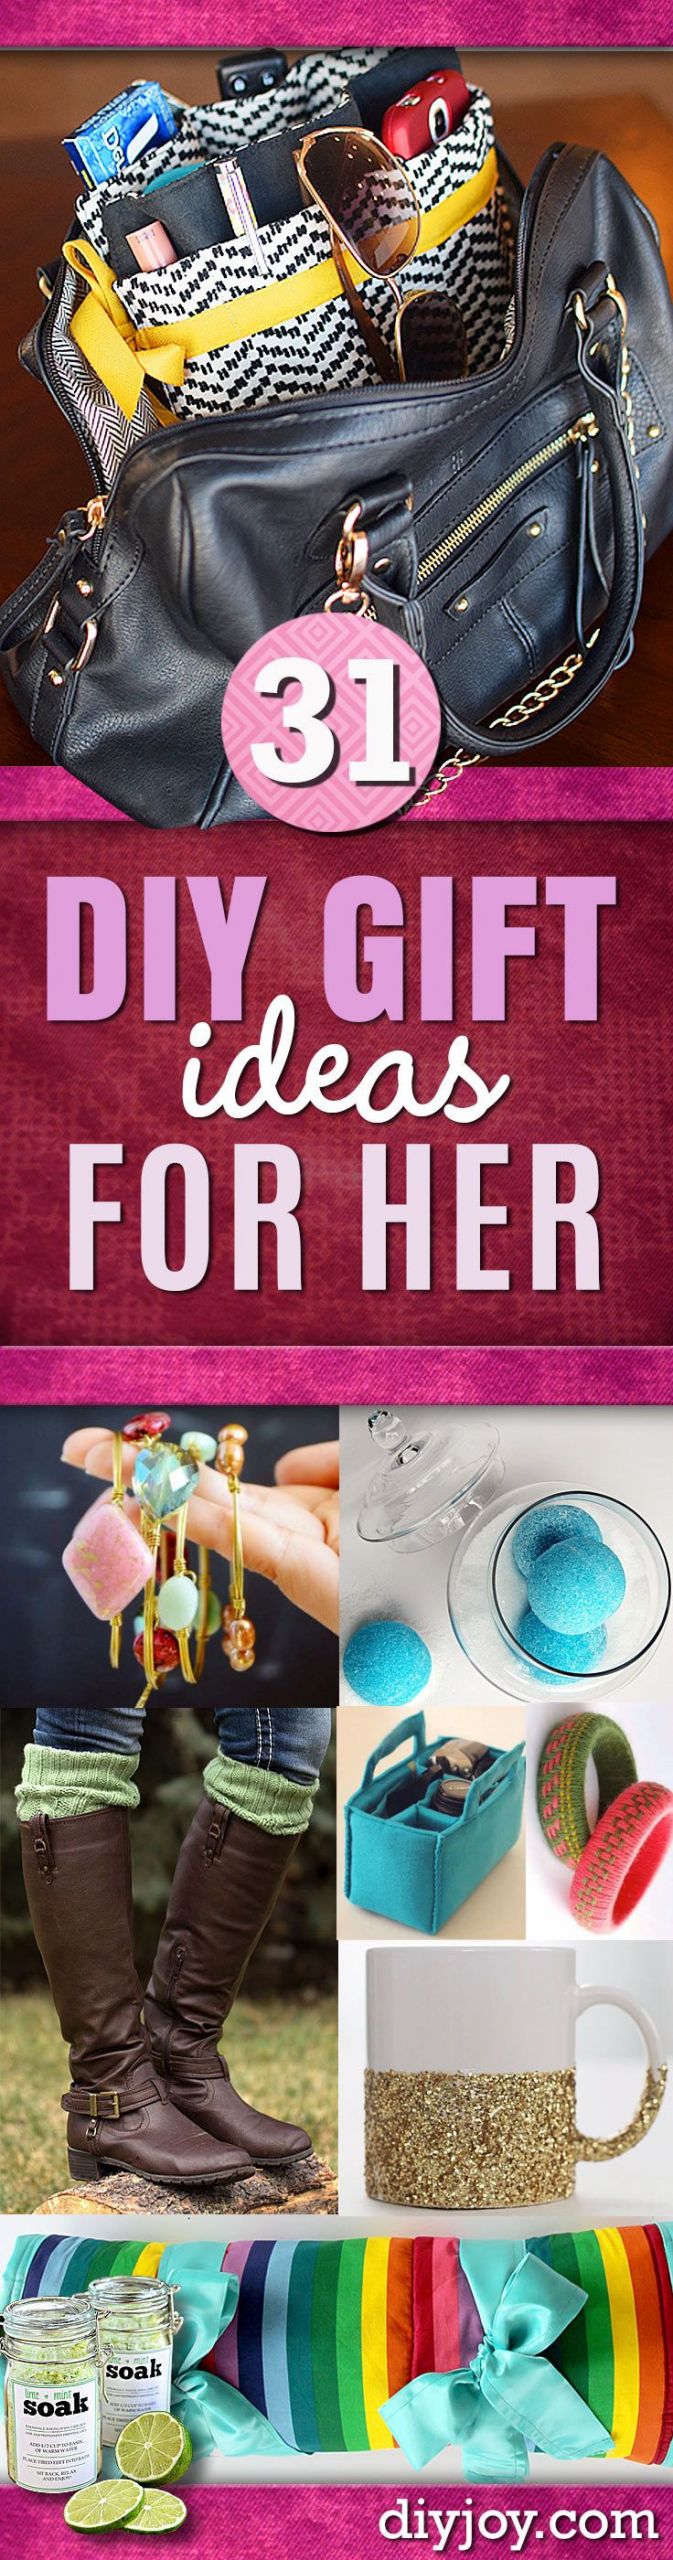 DIY Birthday Gifts For Girlfriend
 Super Special DIY Gift Ideas for Her DIY JOY